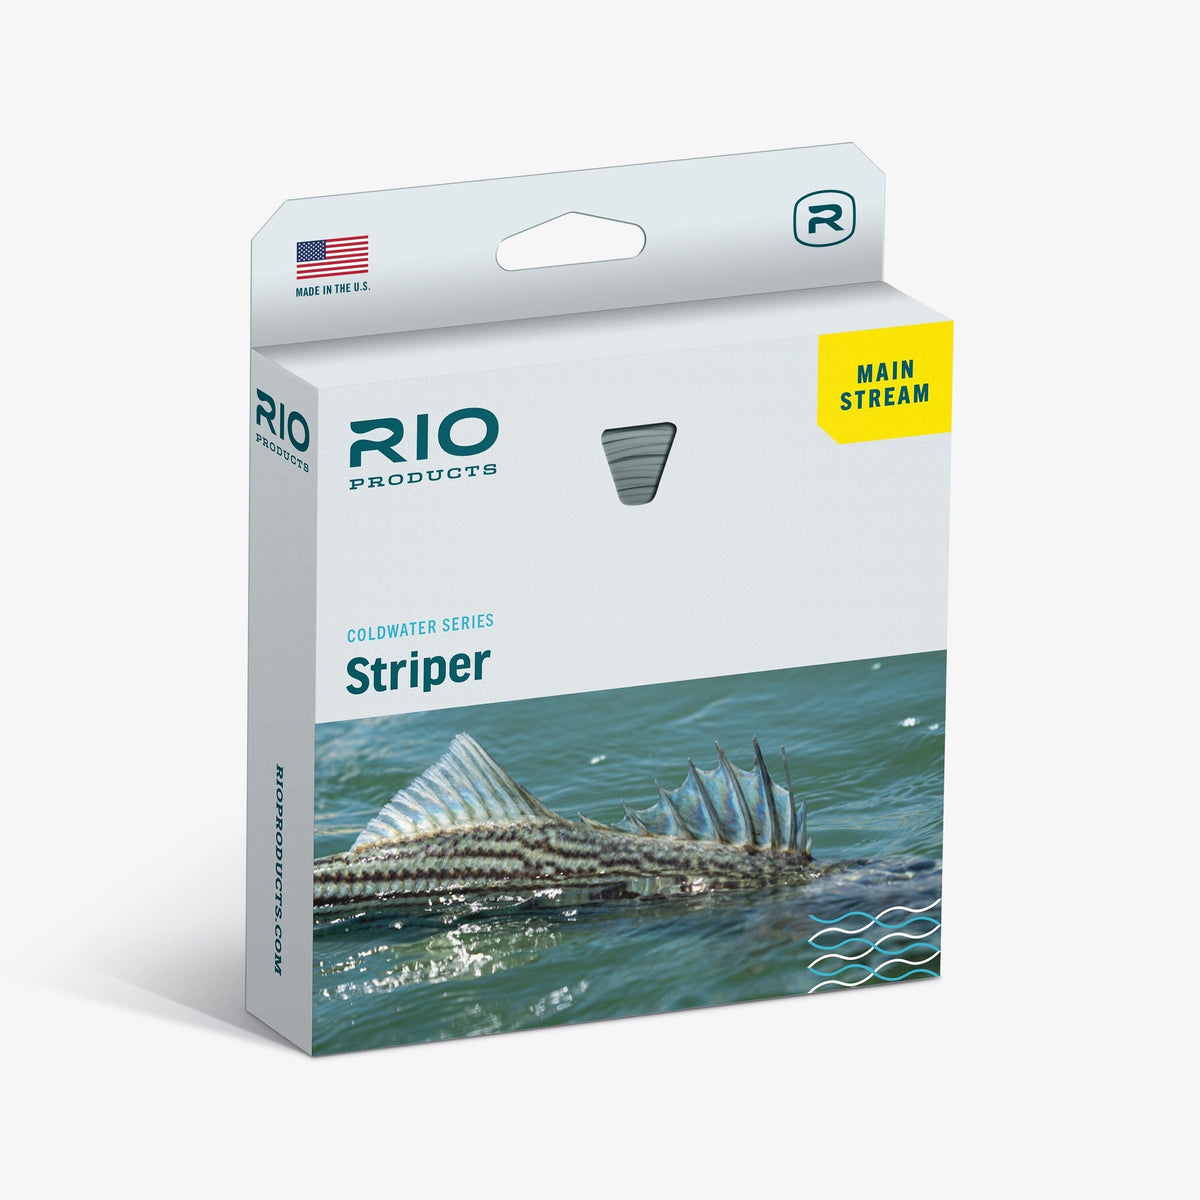 RIO Coldwater Maintstream Striper Fly Line